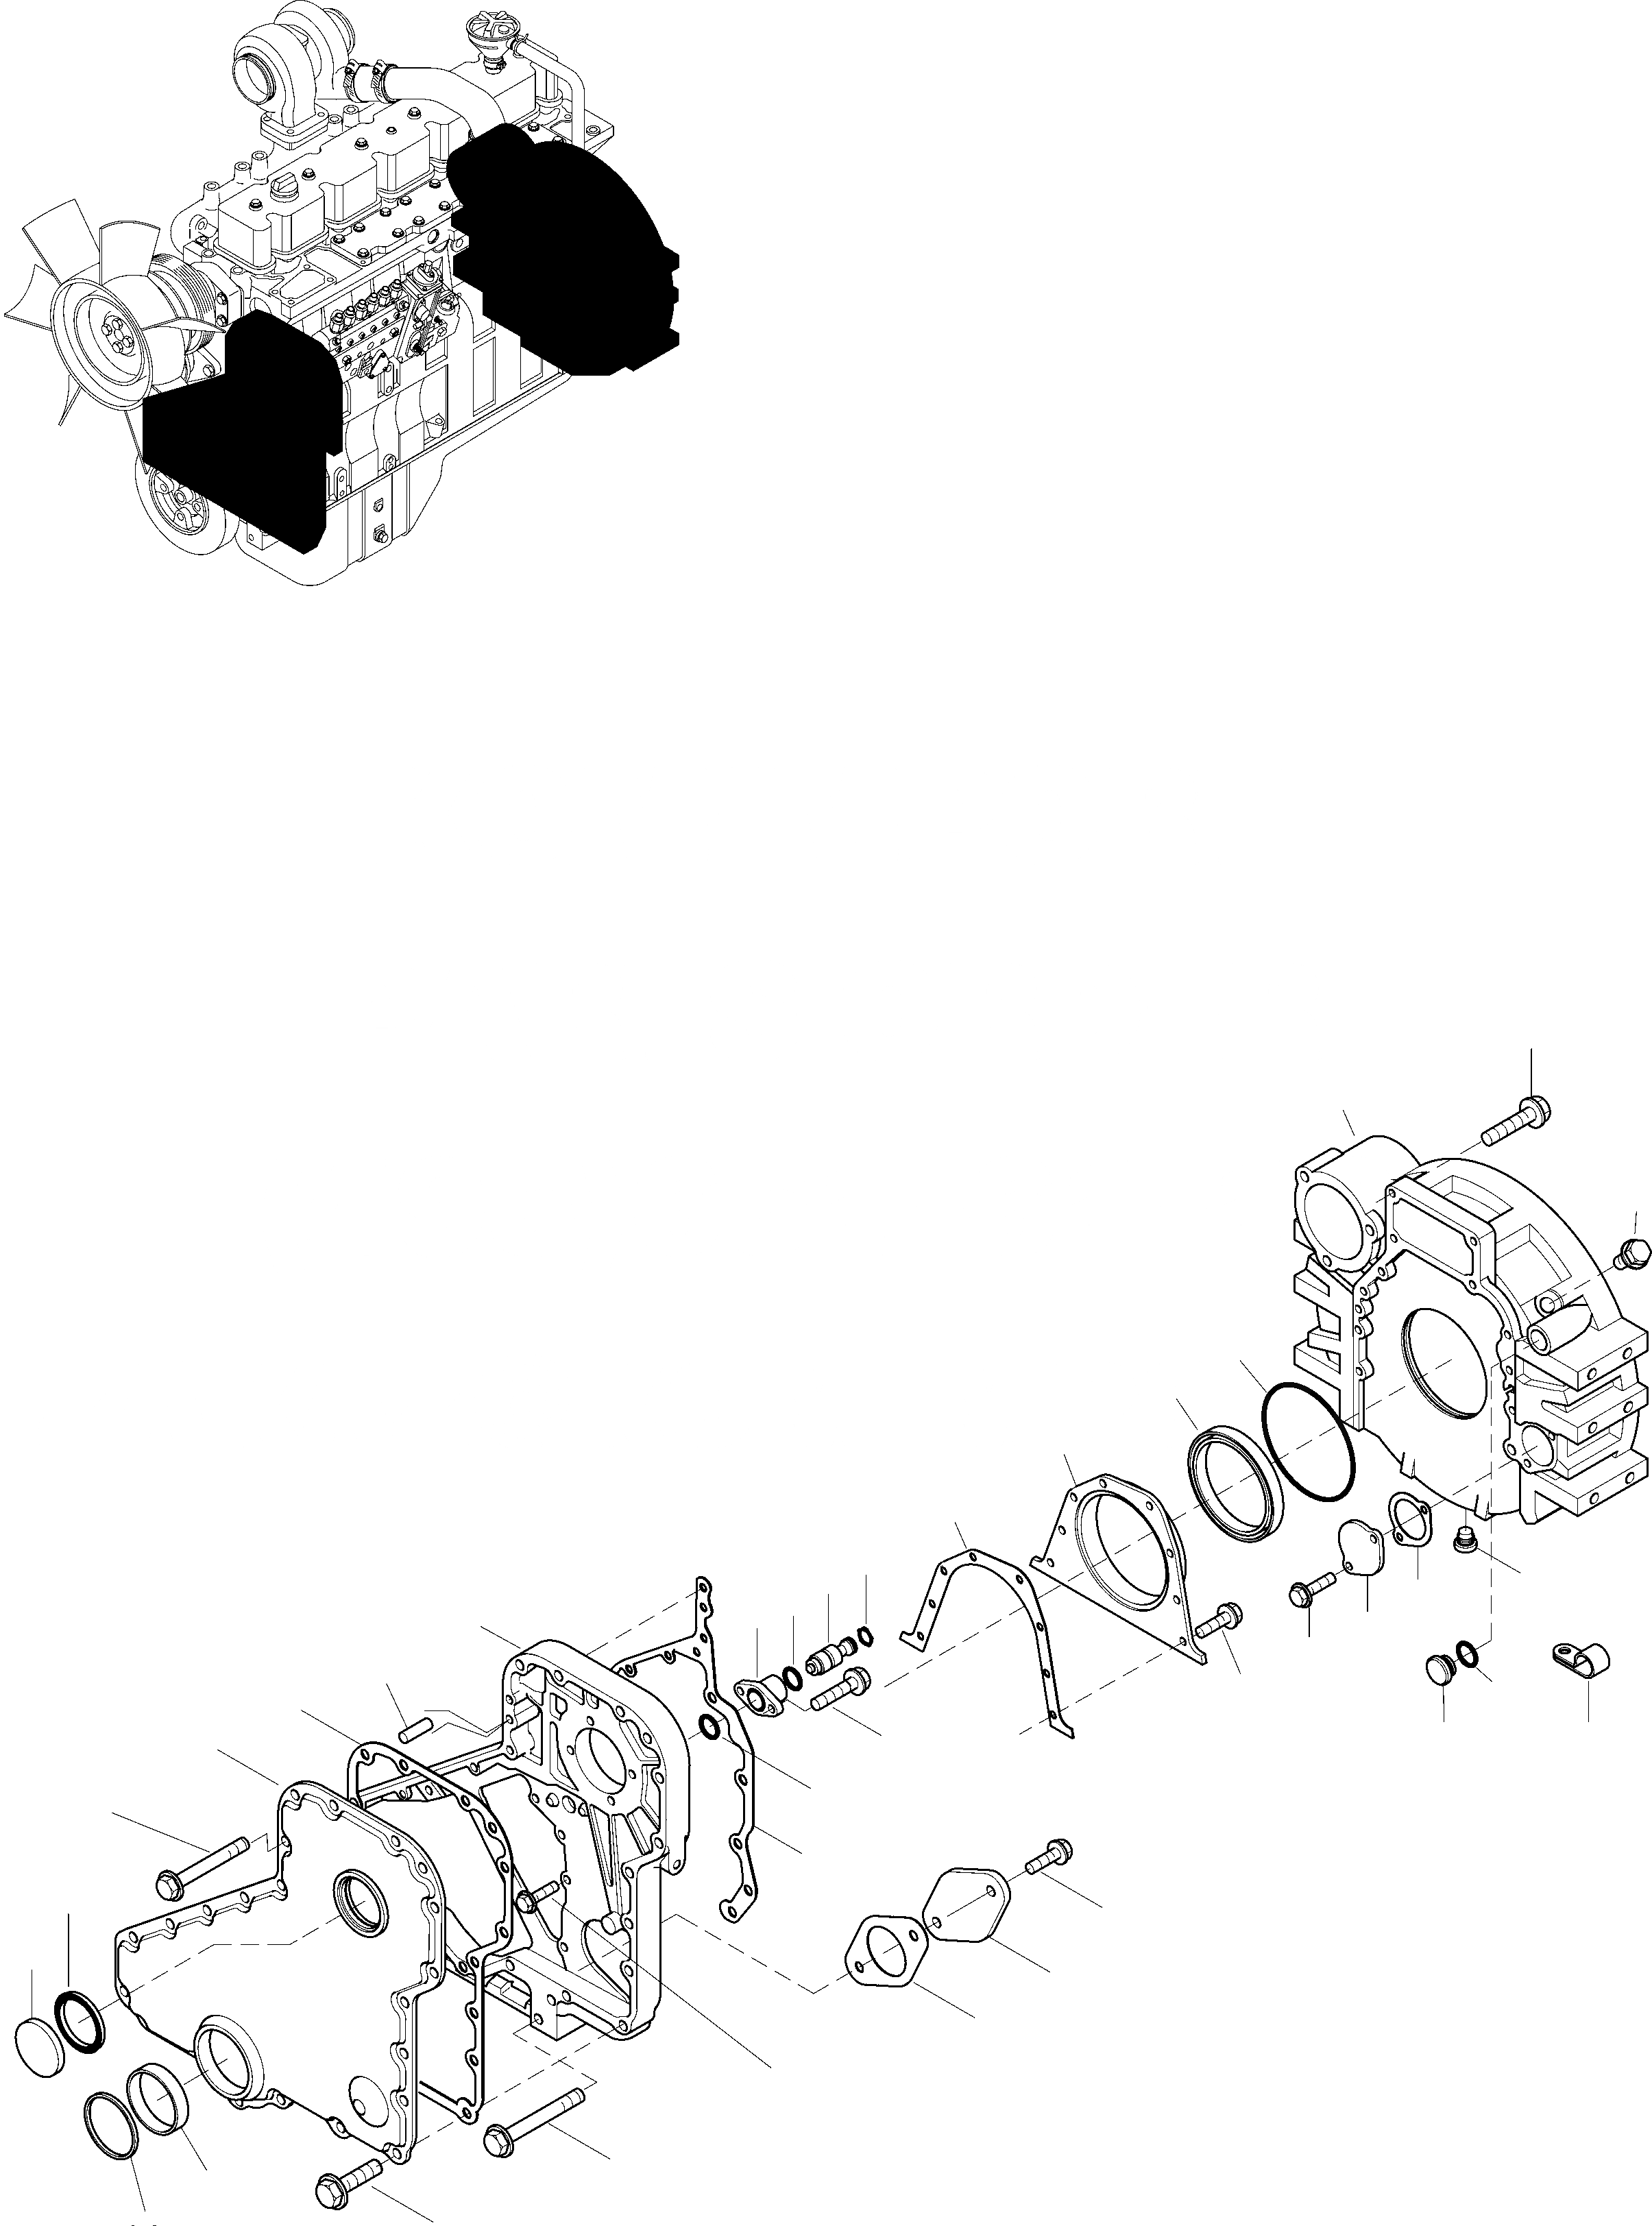 Схема запчастей Komatsu WA320-3 active - TIMING КОРПУС ШЕСТЕРЕНН. ПЕРЕДАЧИ И КАРТЕР МАХОВИКА ДВИГАТЕЛЬ, КРЕПЛЕНИЕ ДВИГАТЕЛЯ